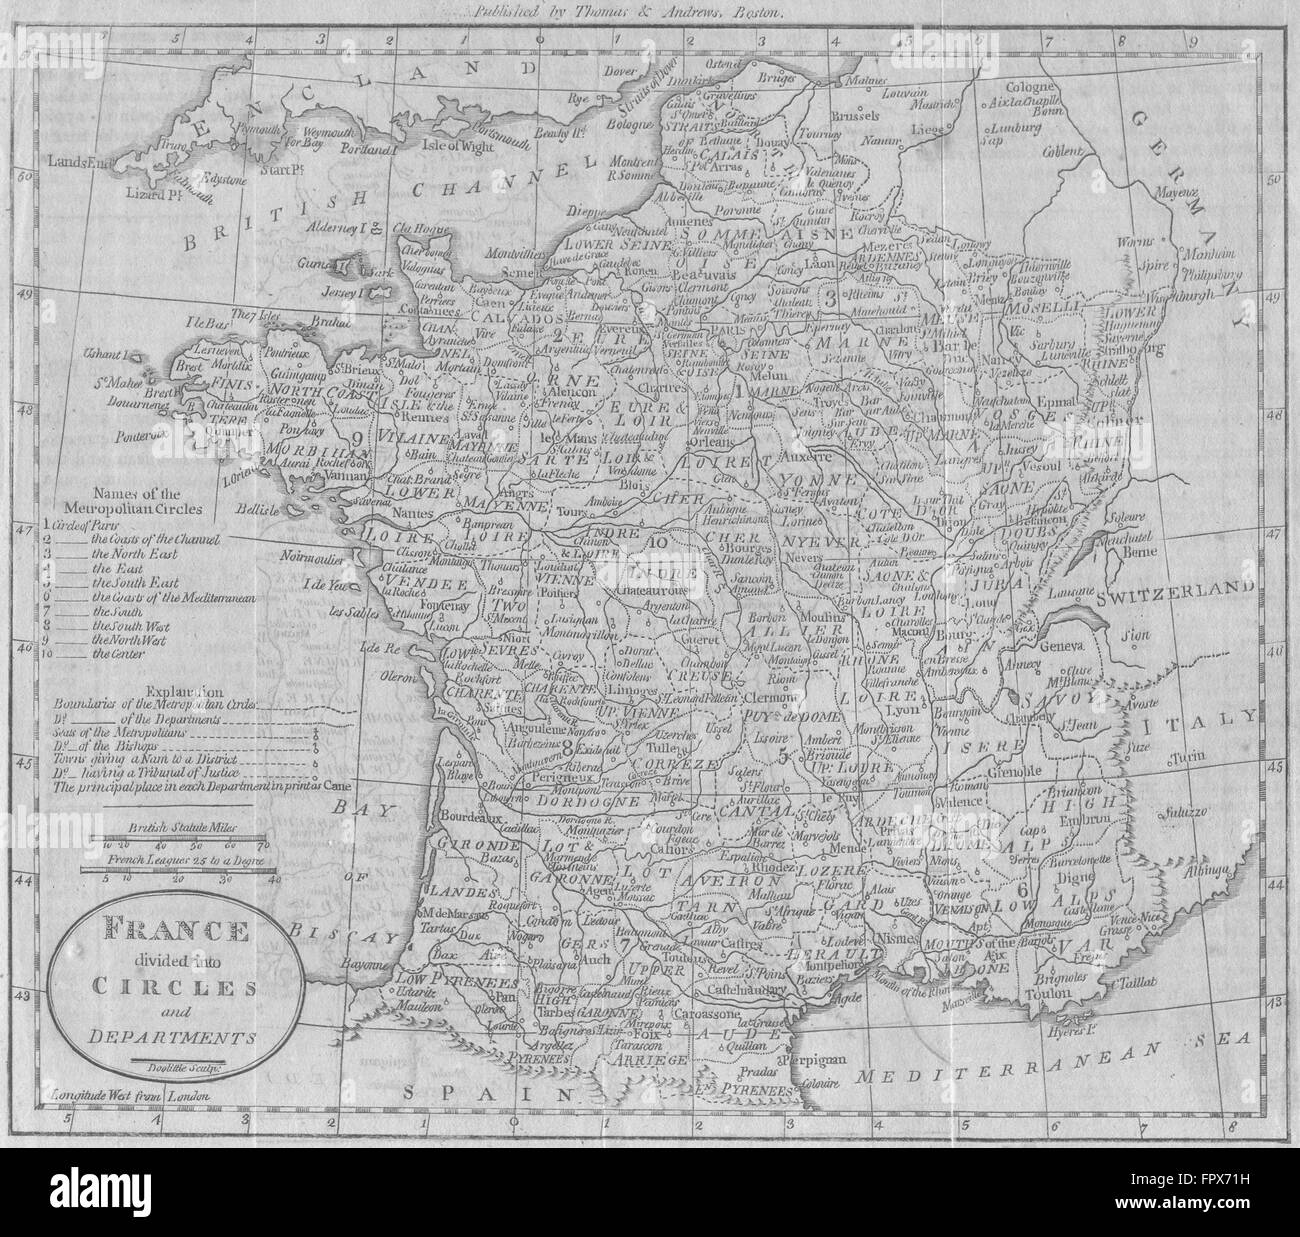 FRANCE: Circles & departments: MORSE, 1796 antique map Stock Photo